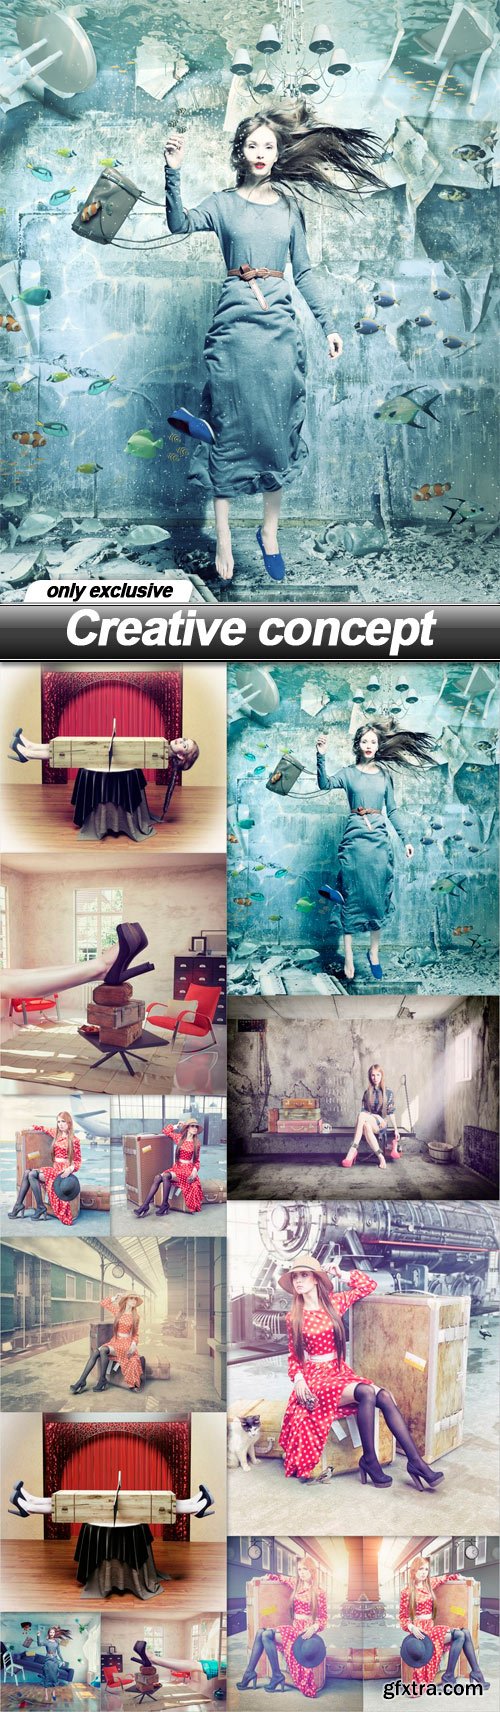 Creative concept - 13 UHQ JPEG